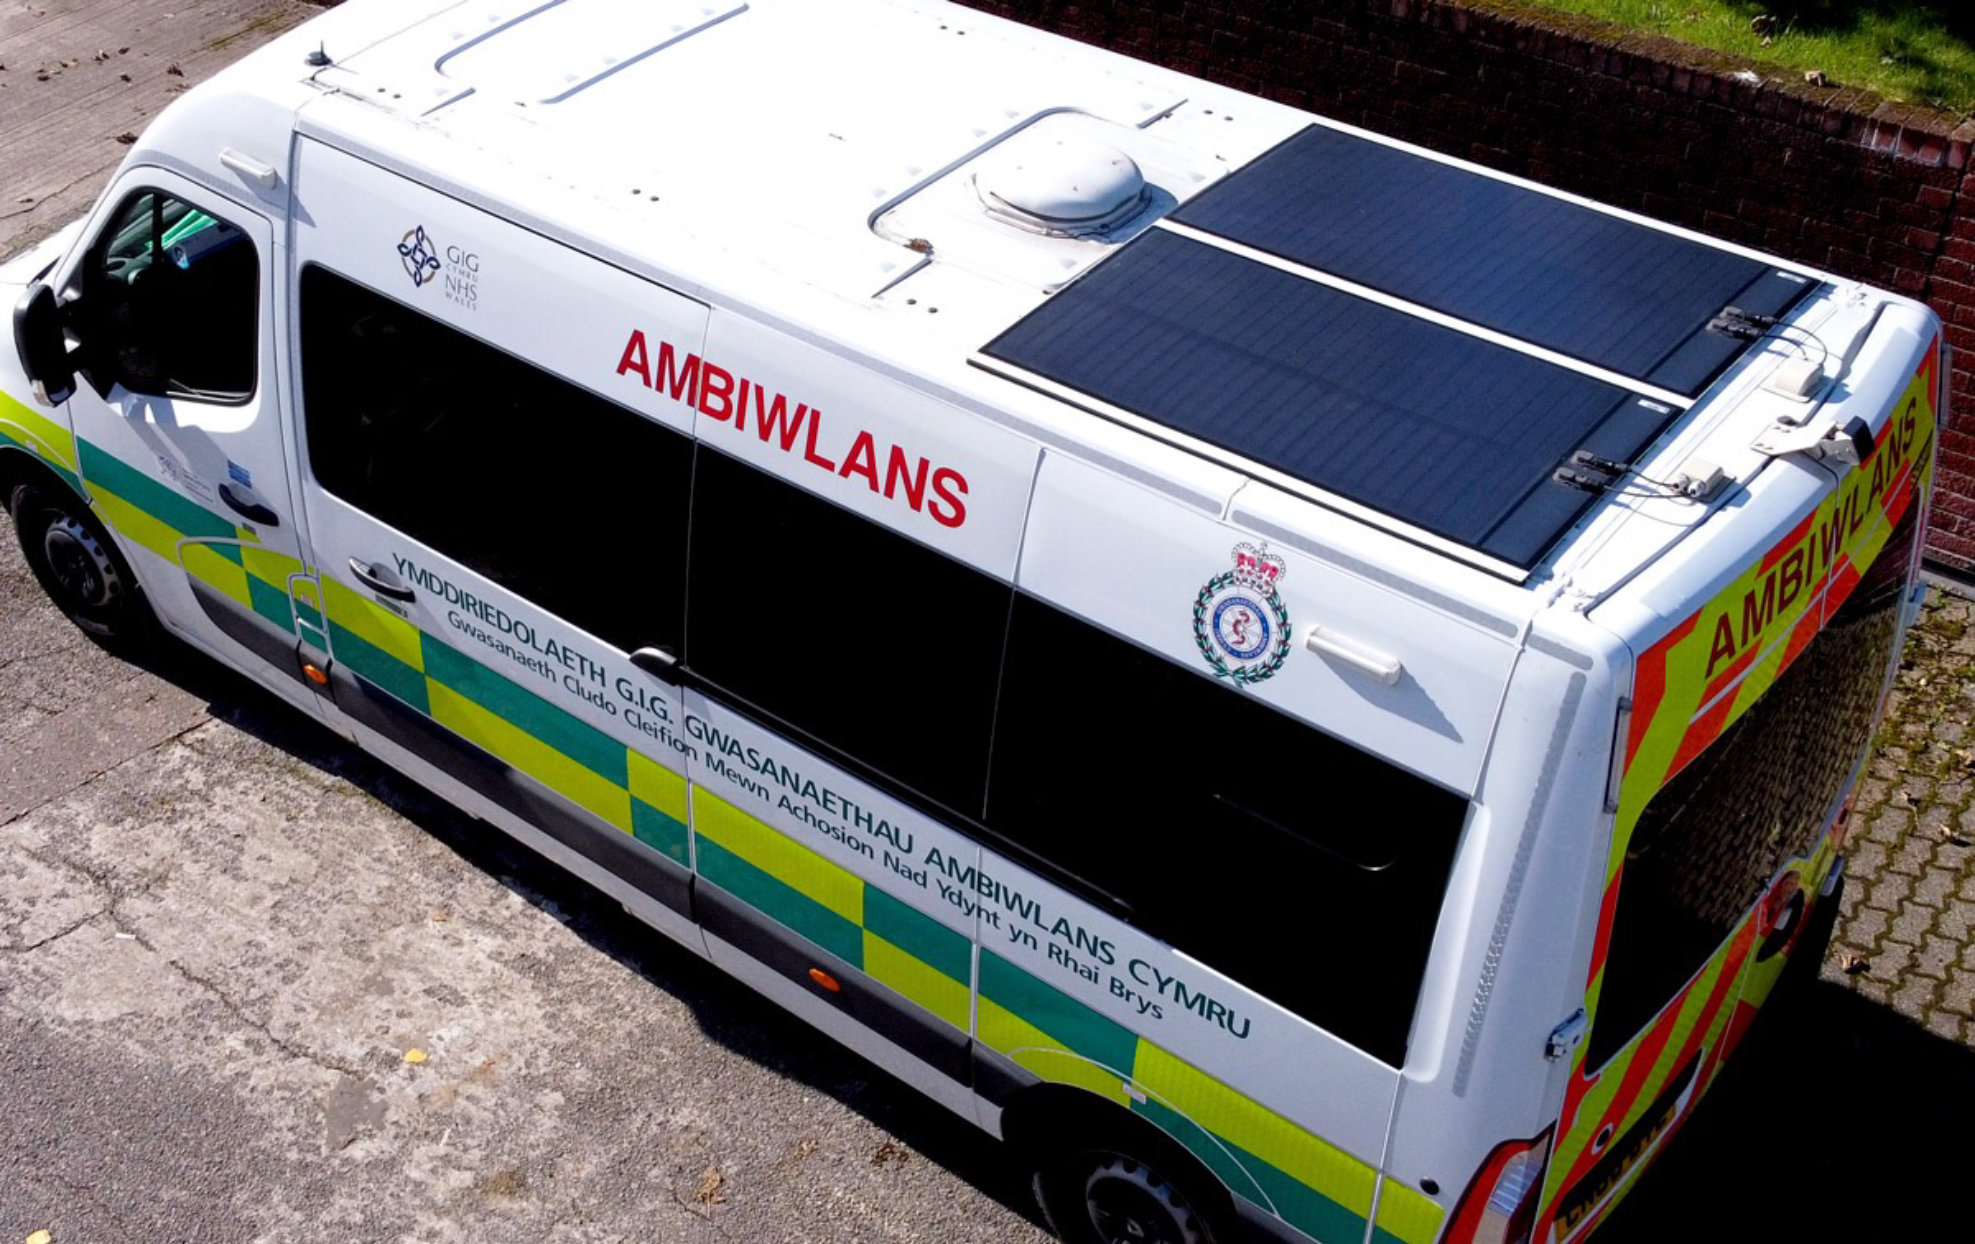 Welsh ambulance service